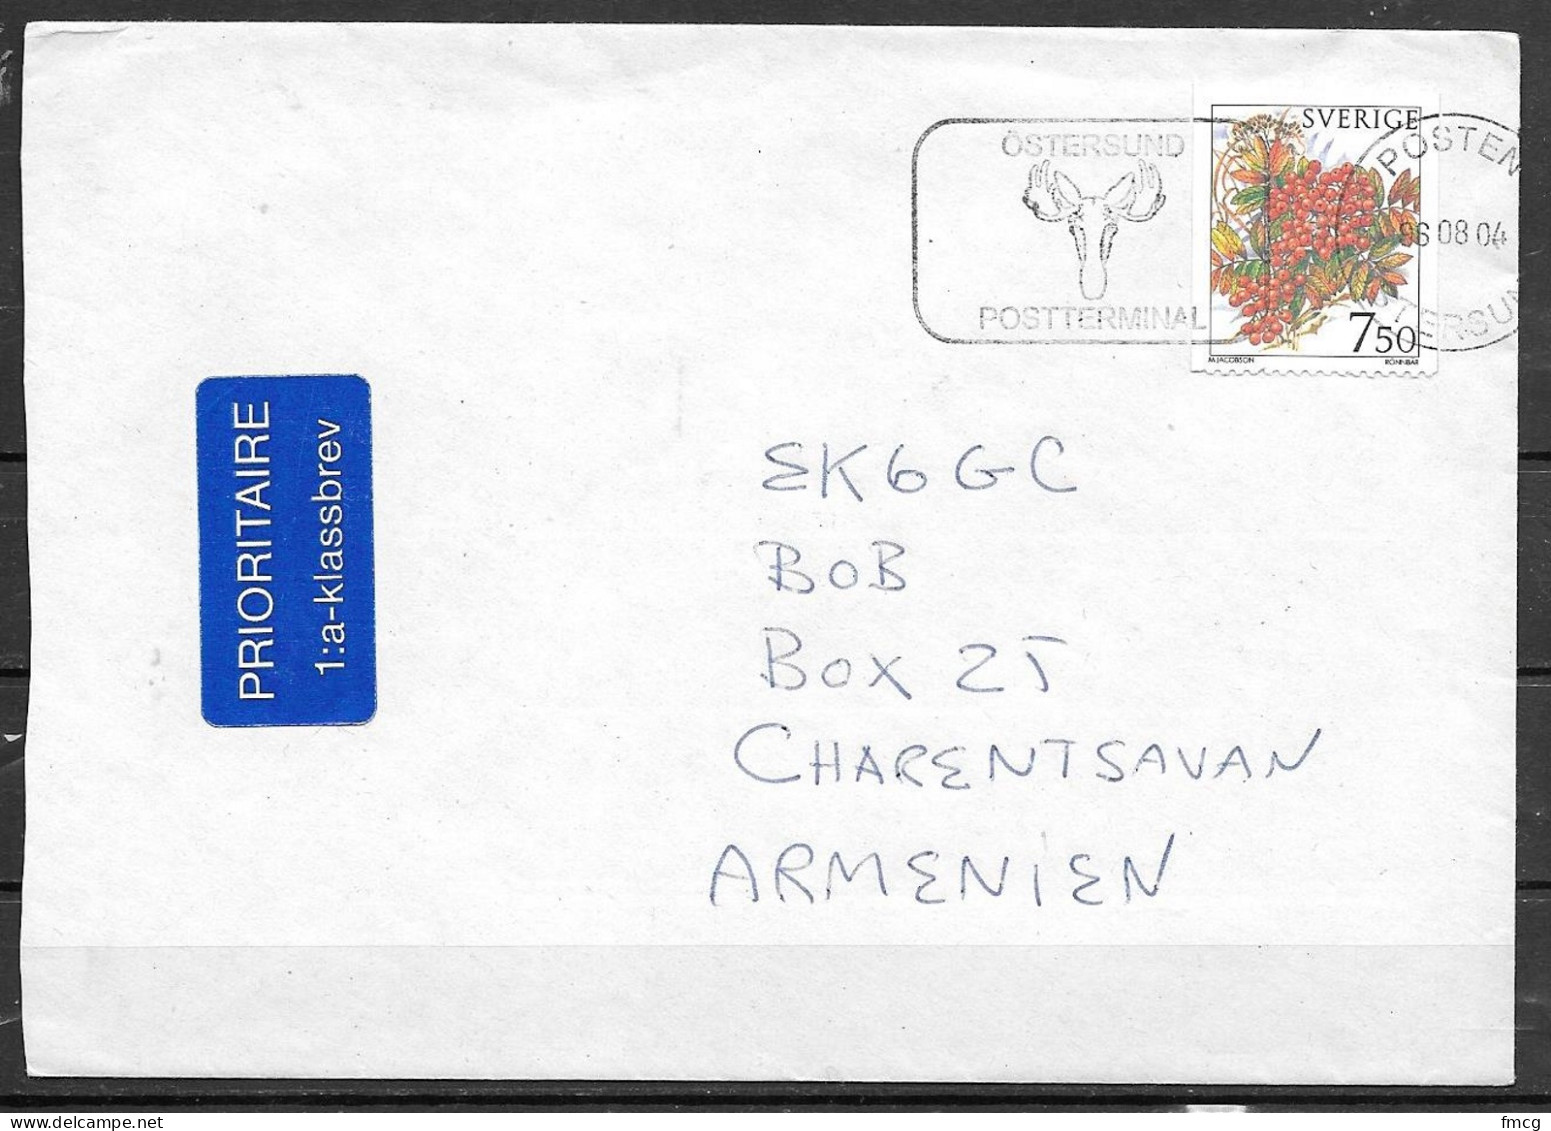 2004 7.50Kr Berries On Cover To Armenia - Storia Postale